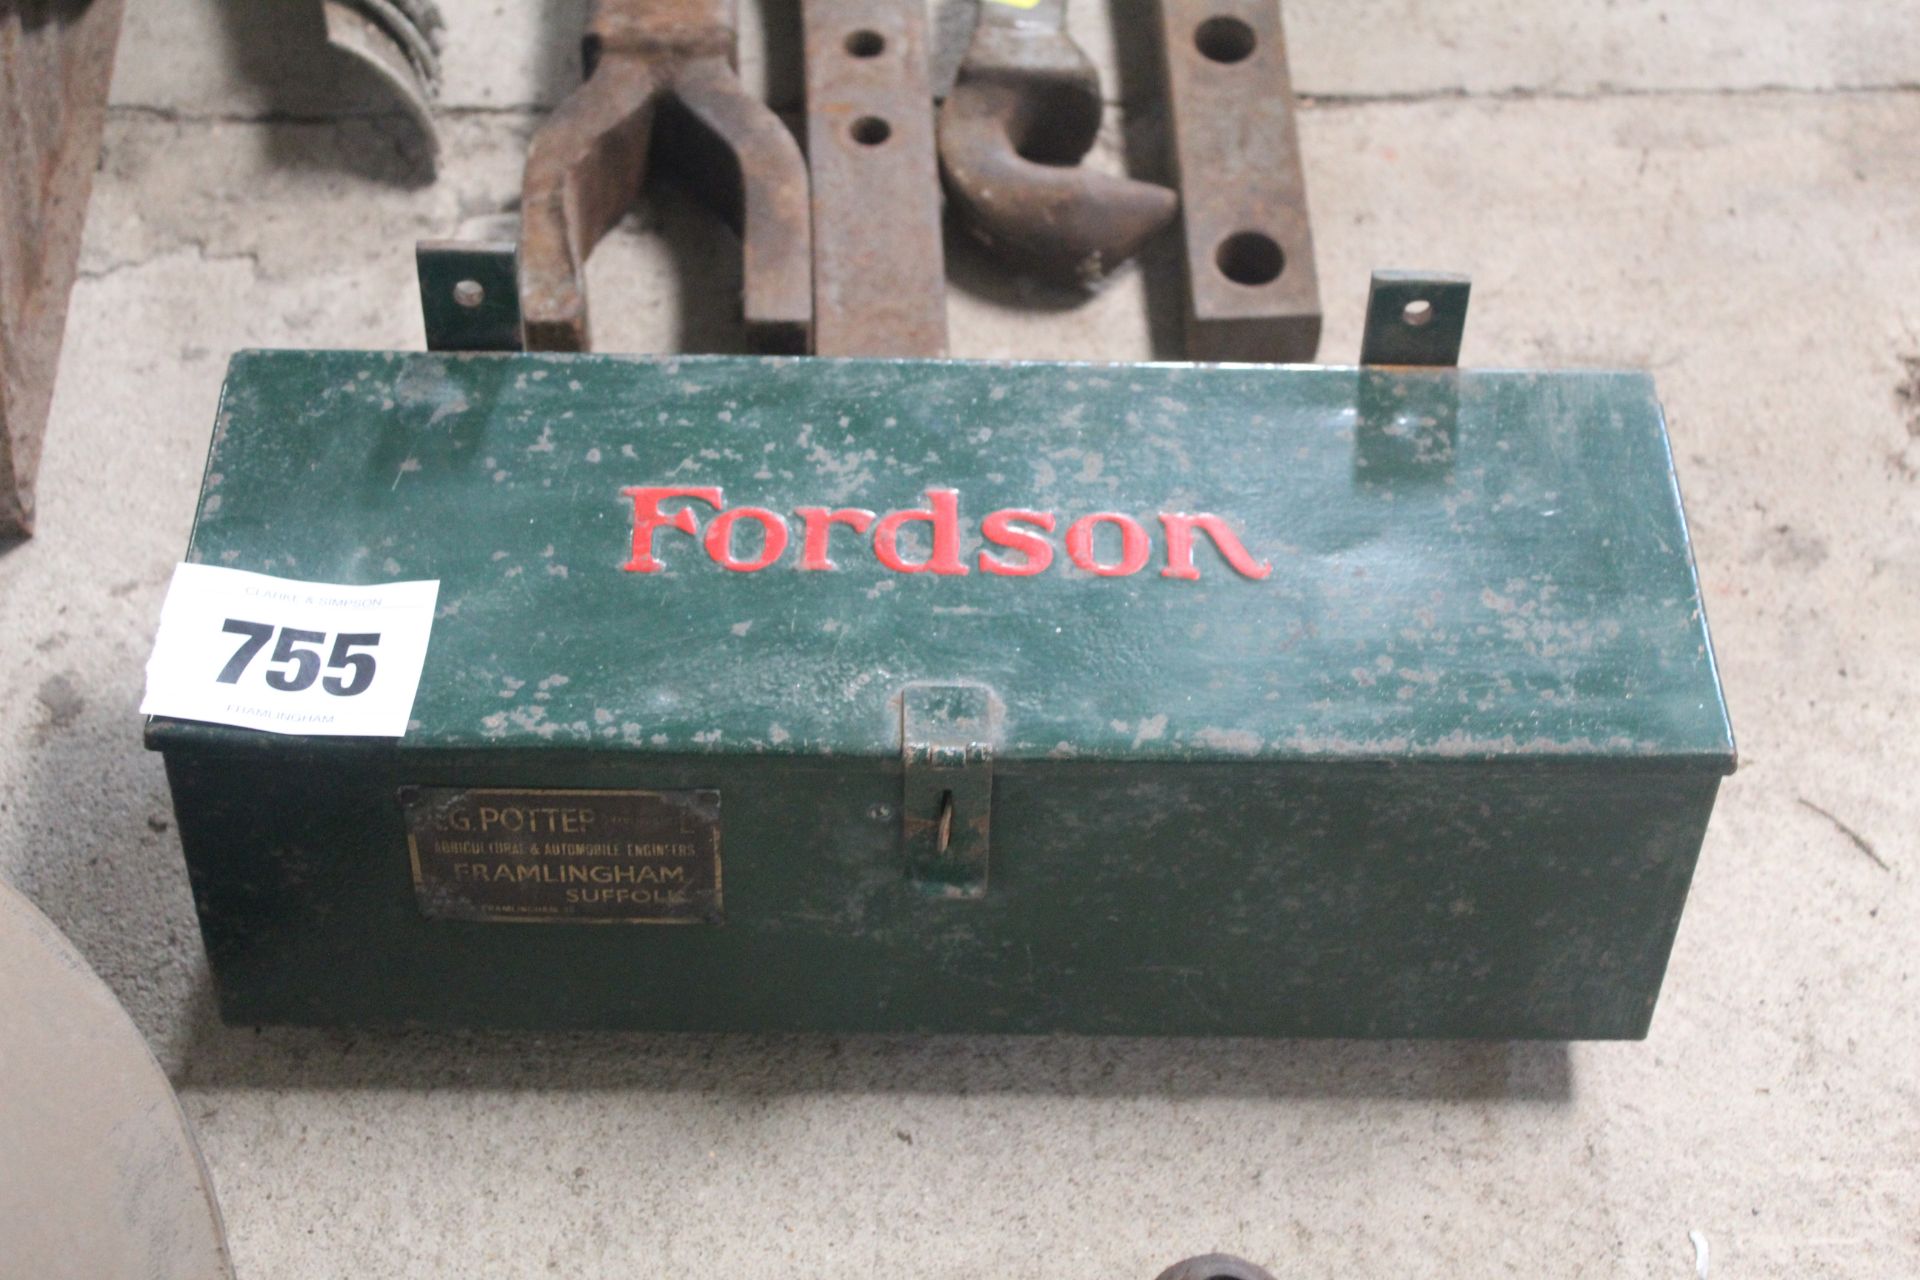 Fordson E27N toolbox.